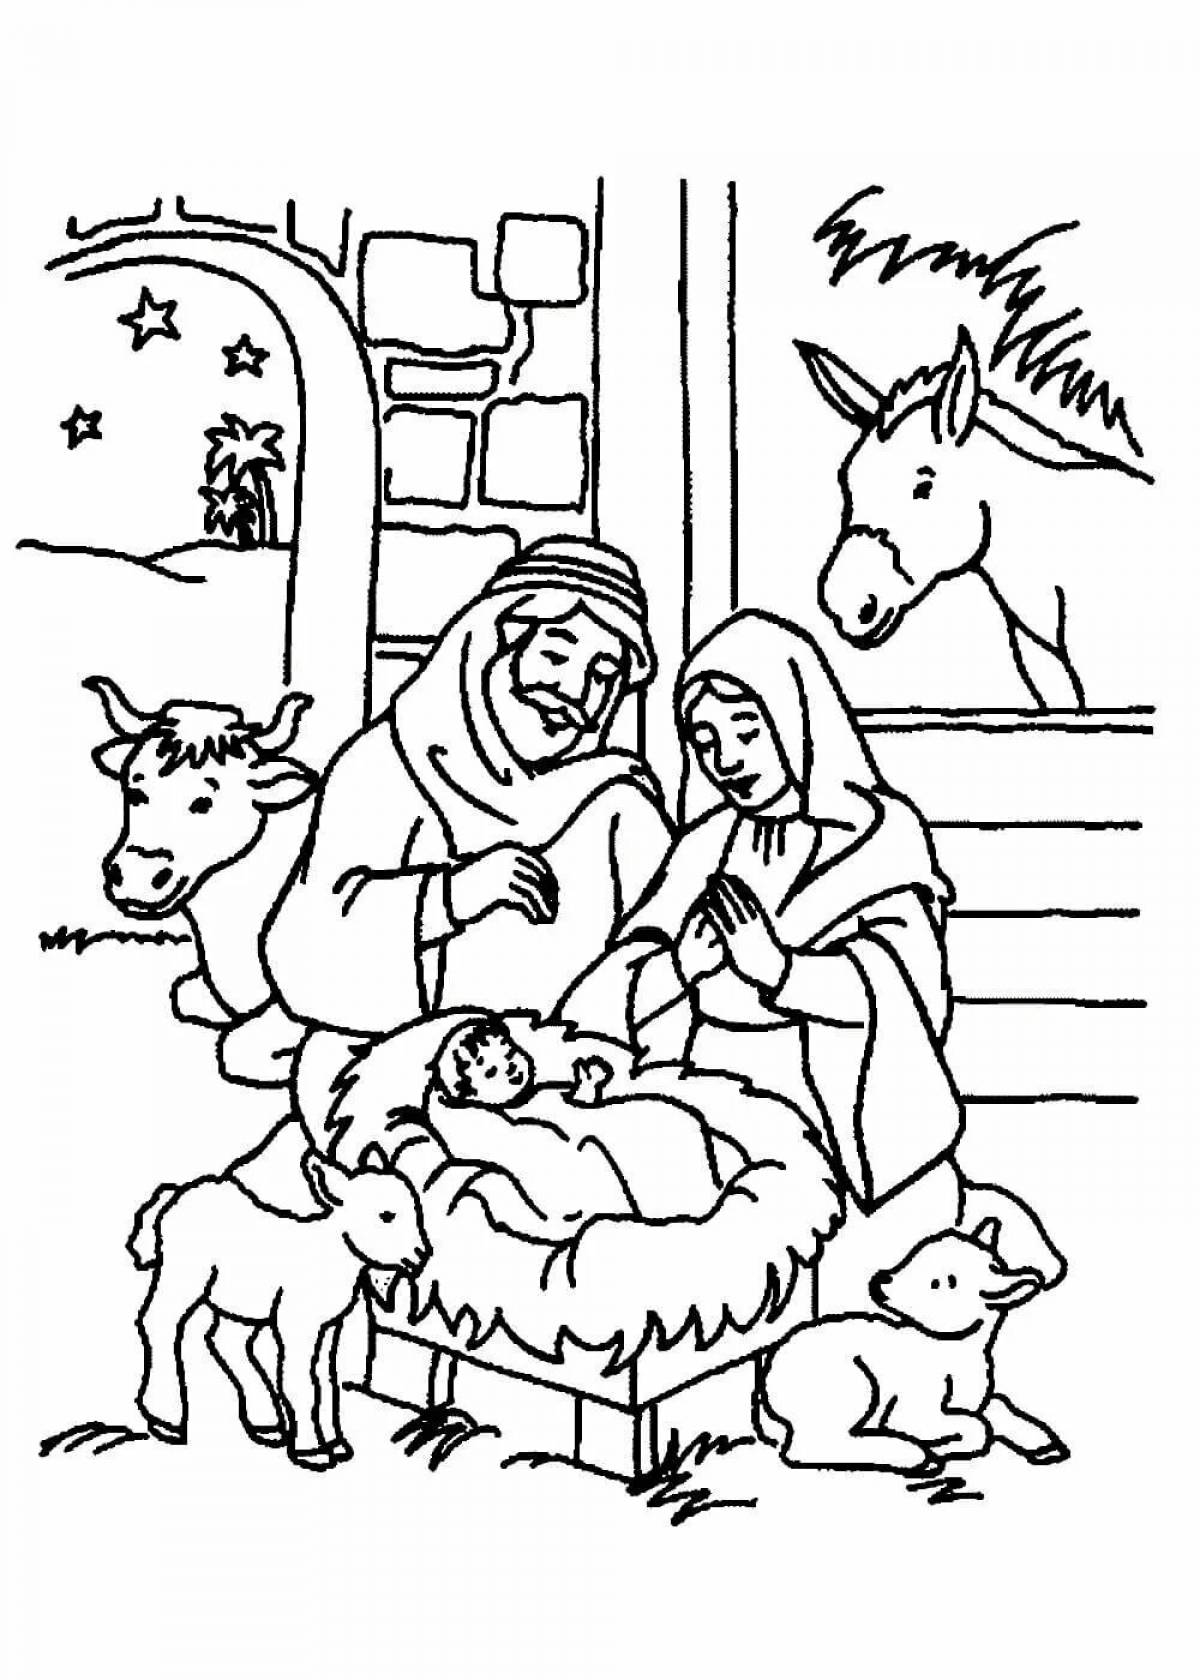 Birth of christ #5